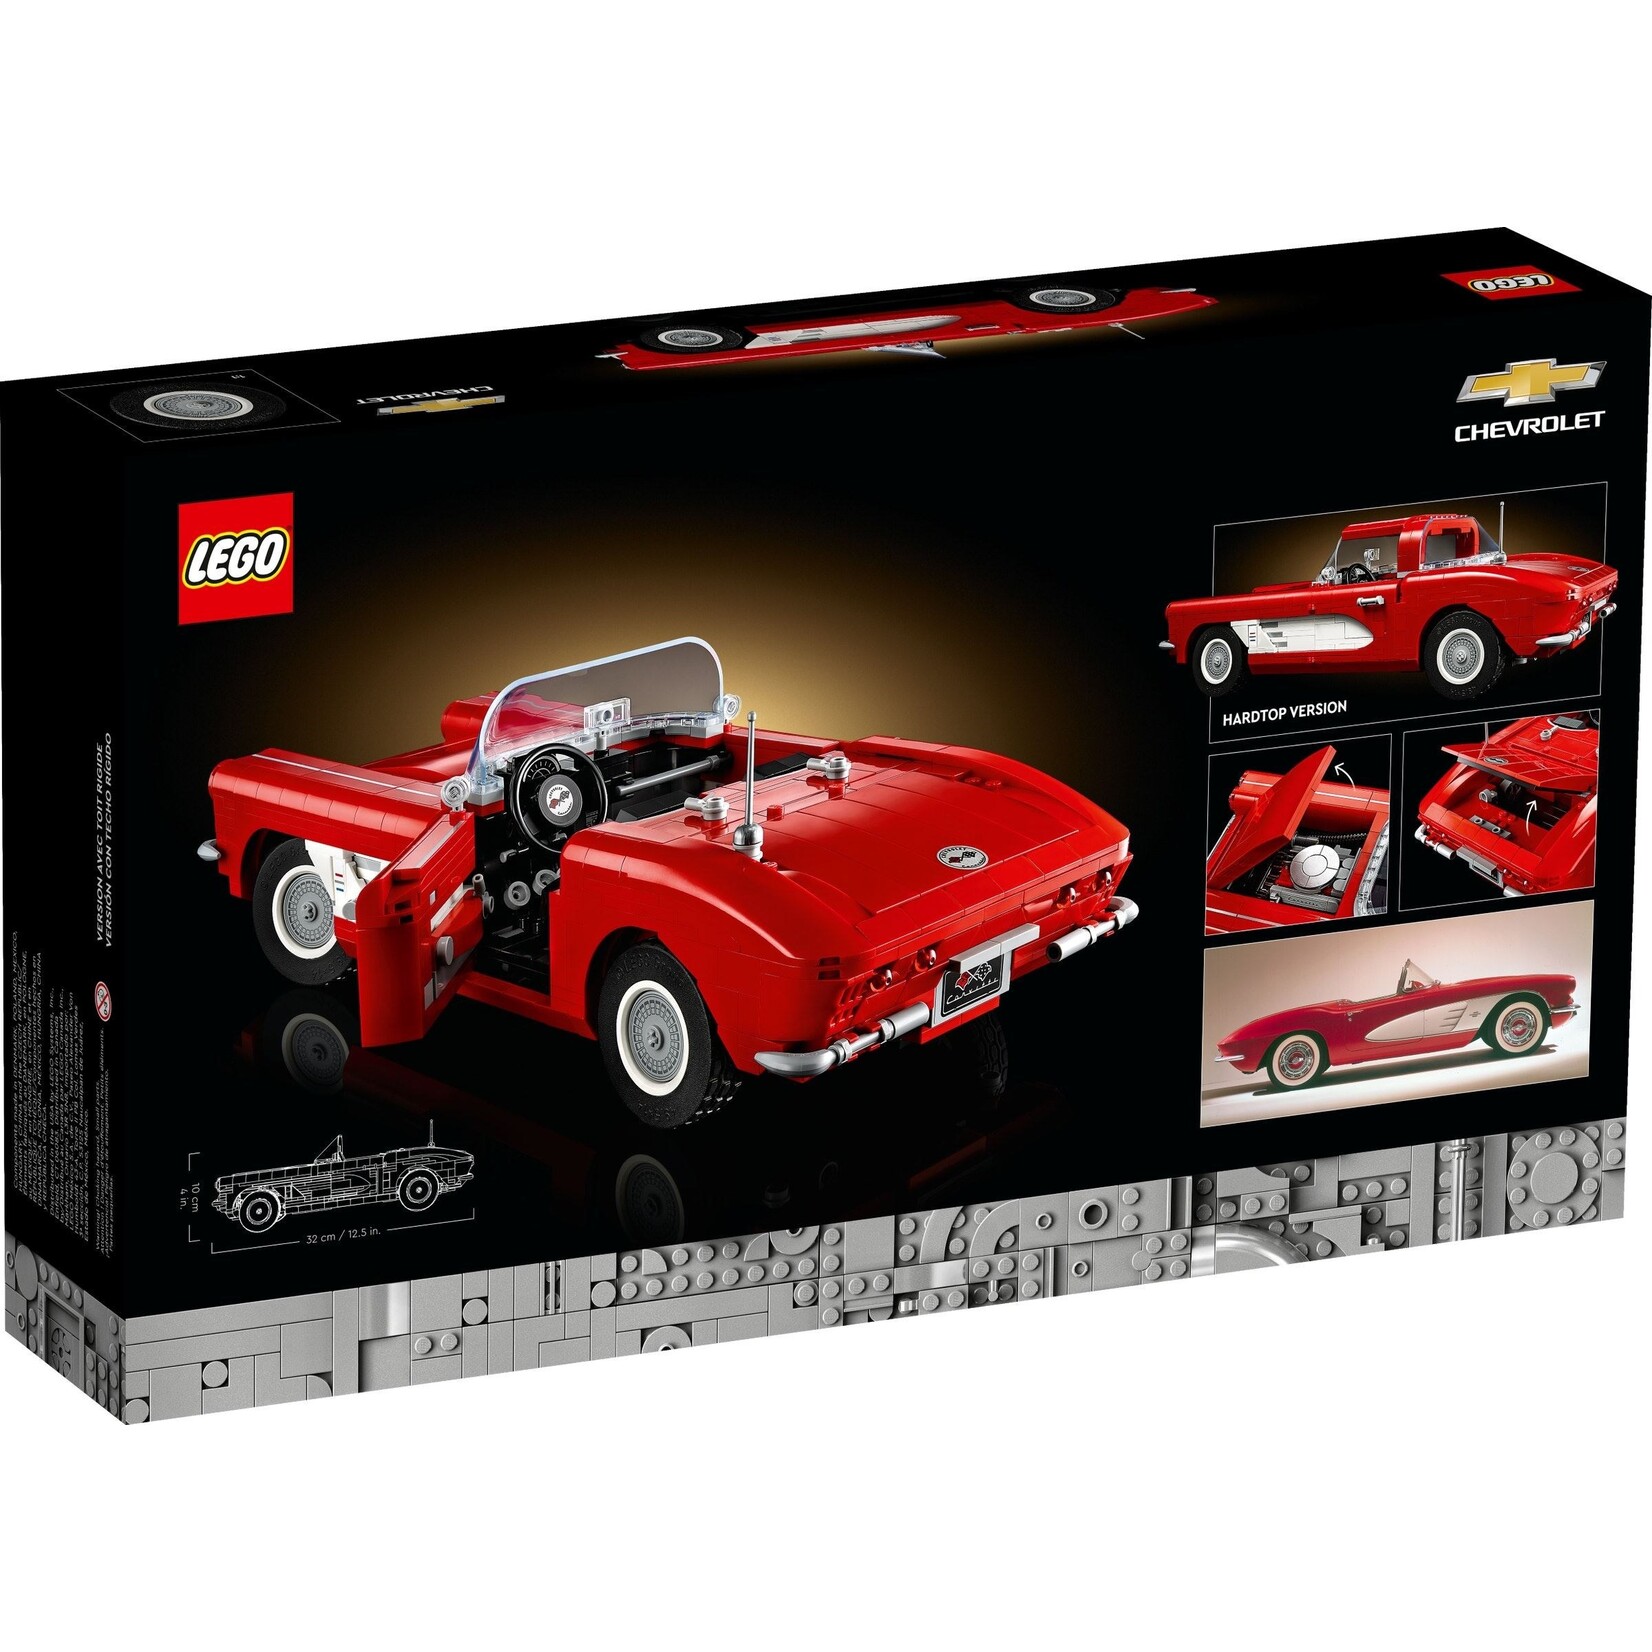 LEGO Corvette - 10321